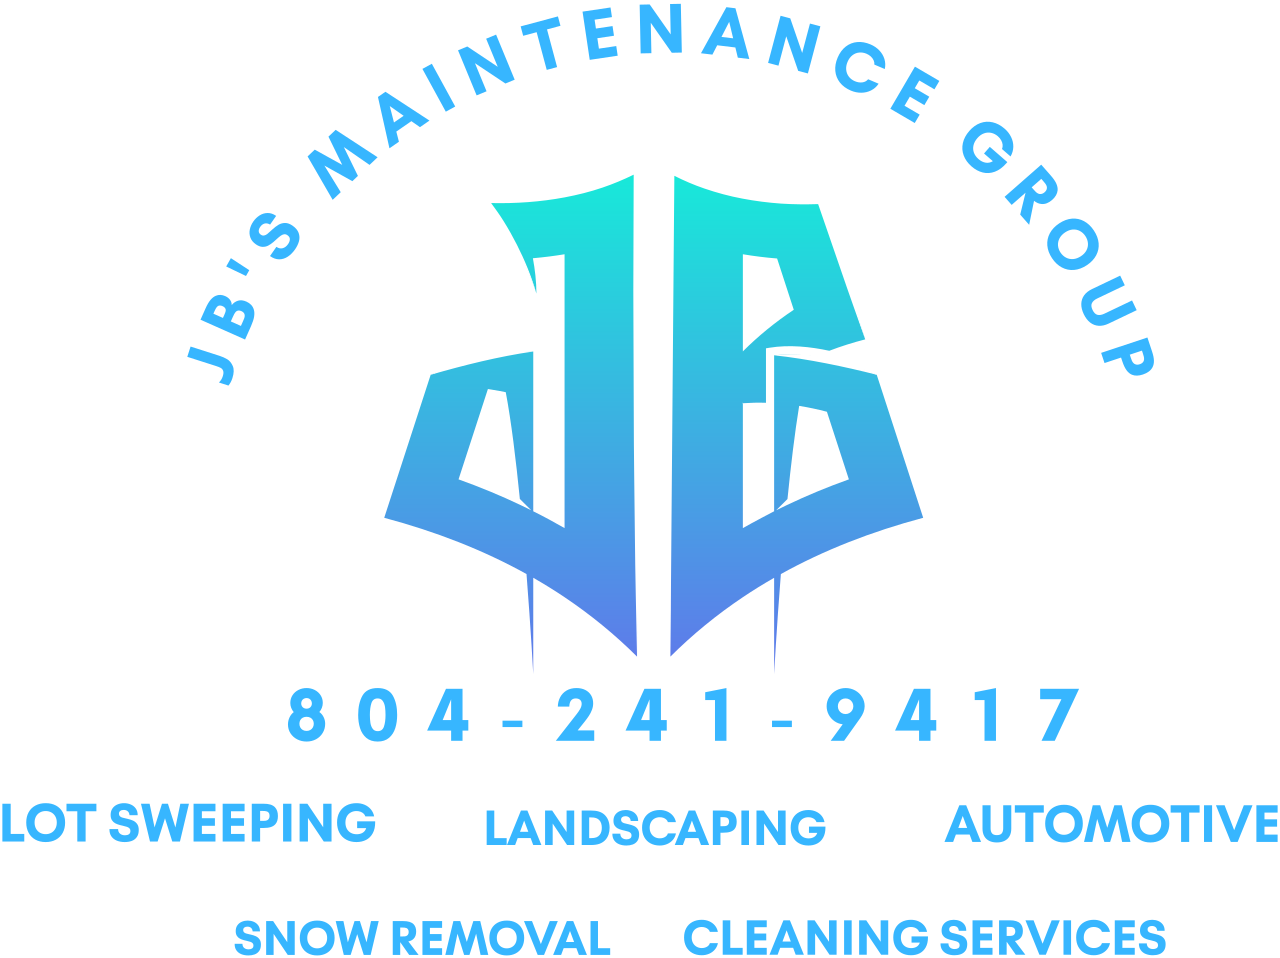 JB'S MAINTENANCE GROUP's web page